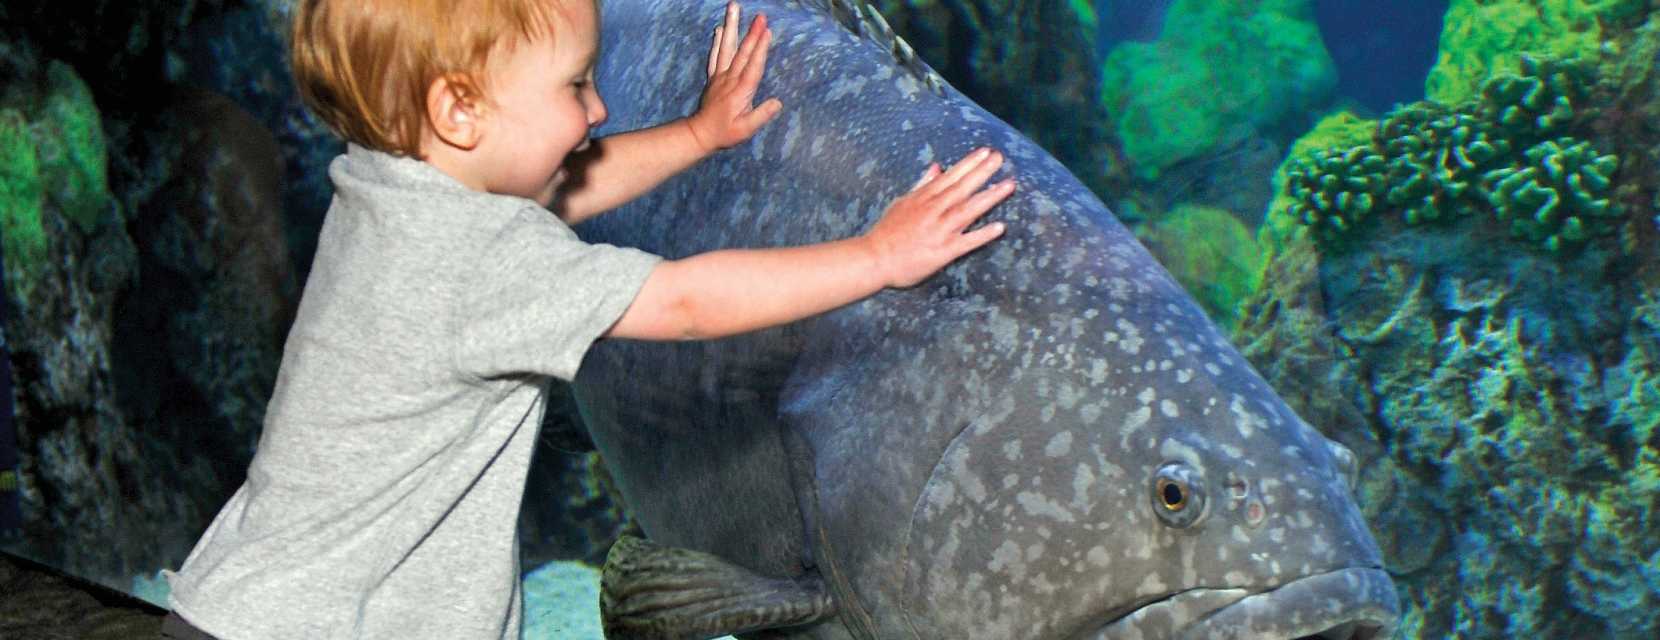 downtown-aquarium-fish-boy